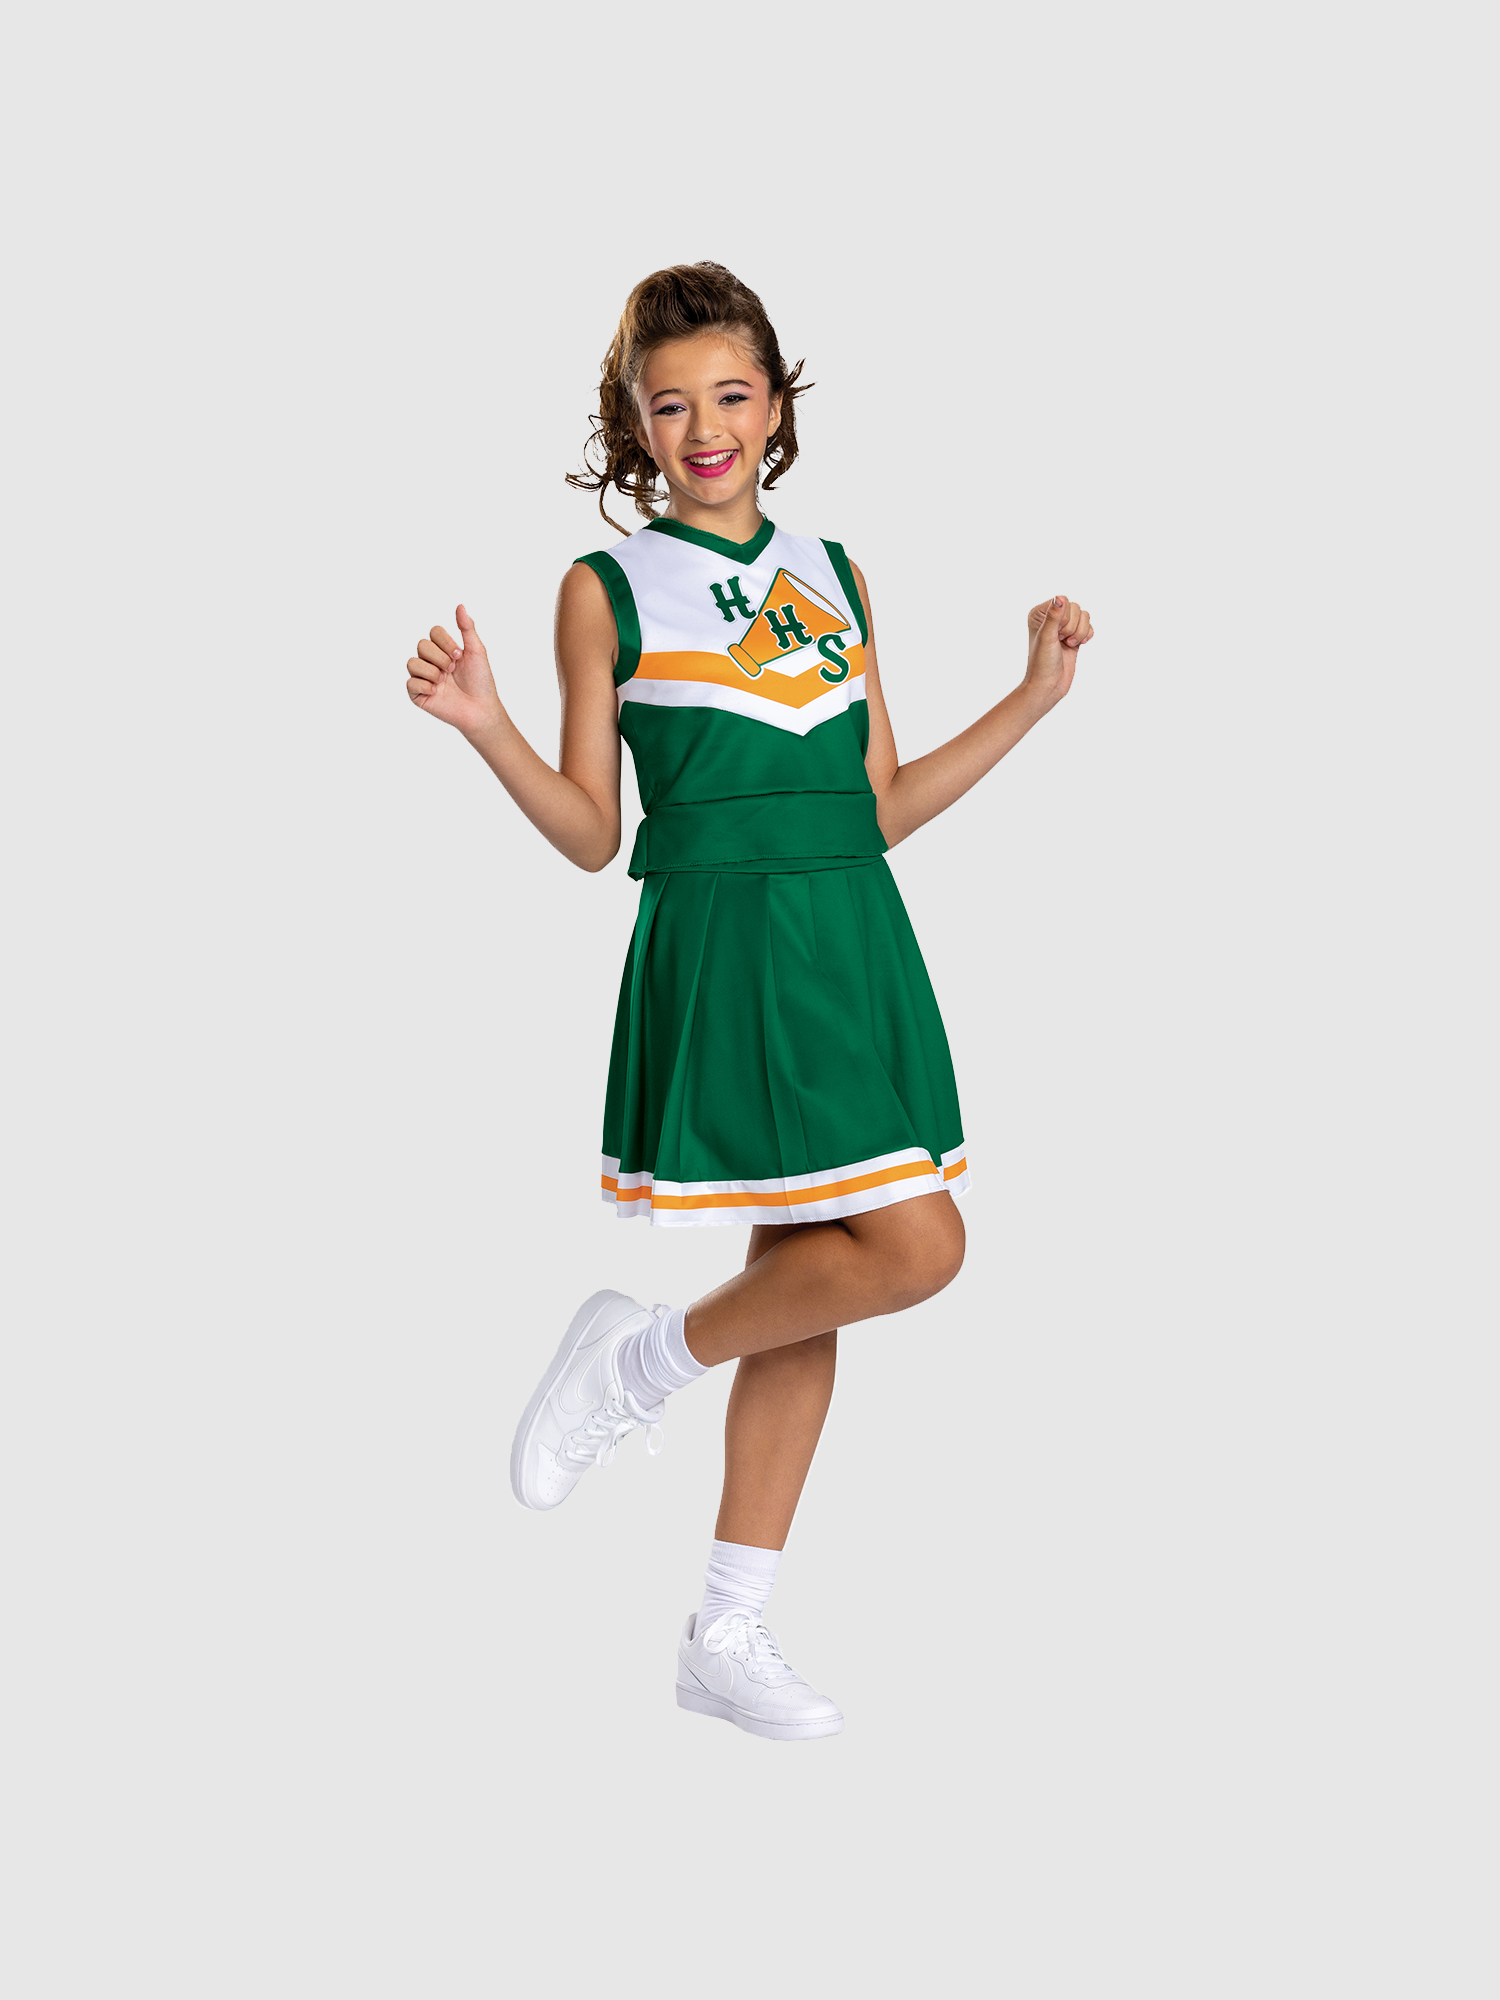 Stranger Things Cheerleader Costume | Netflix Shop